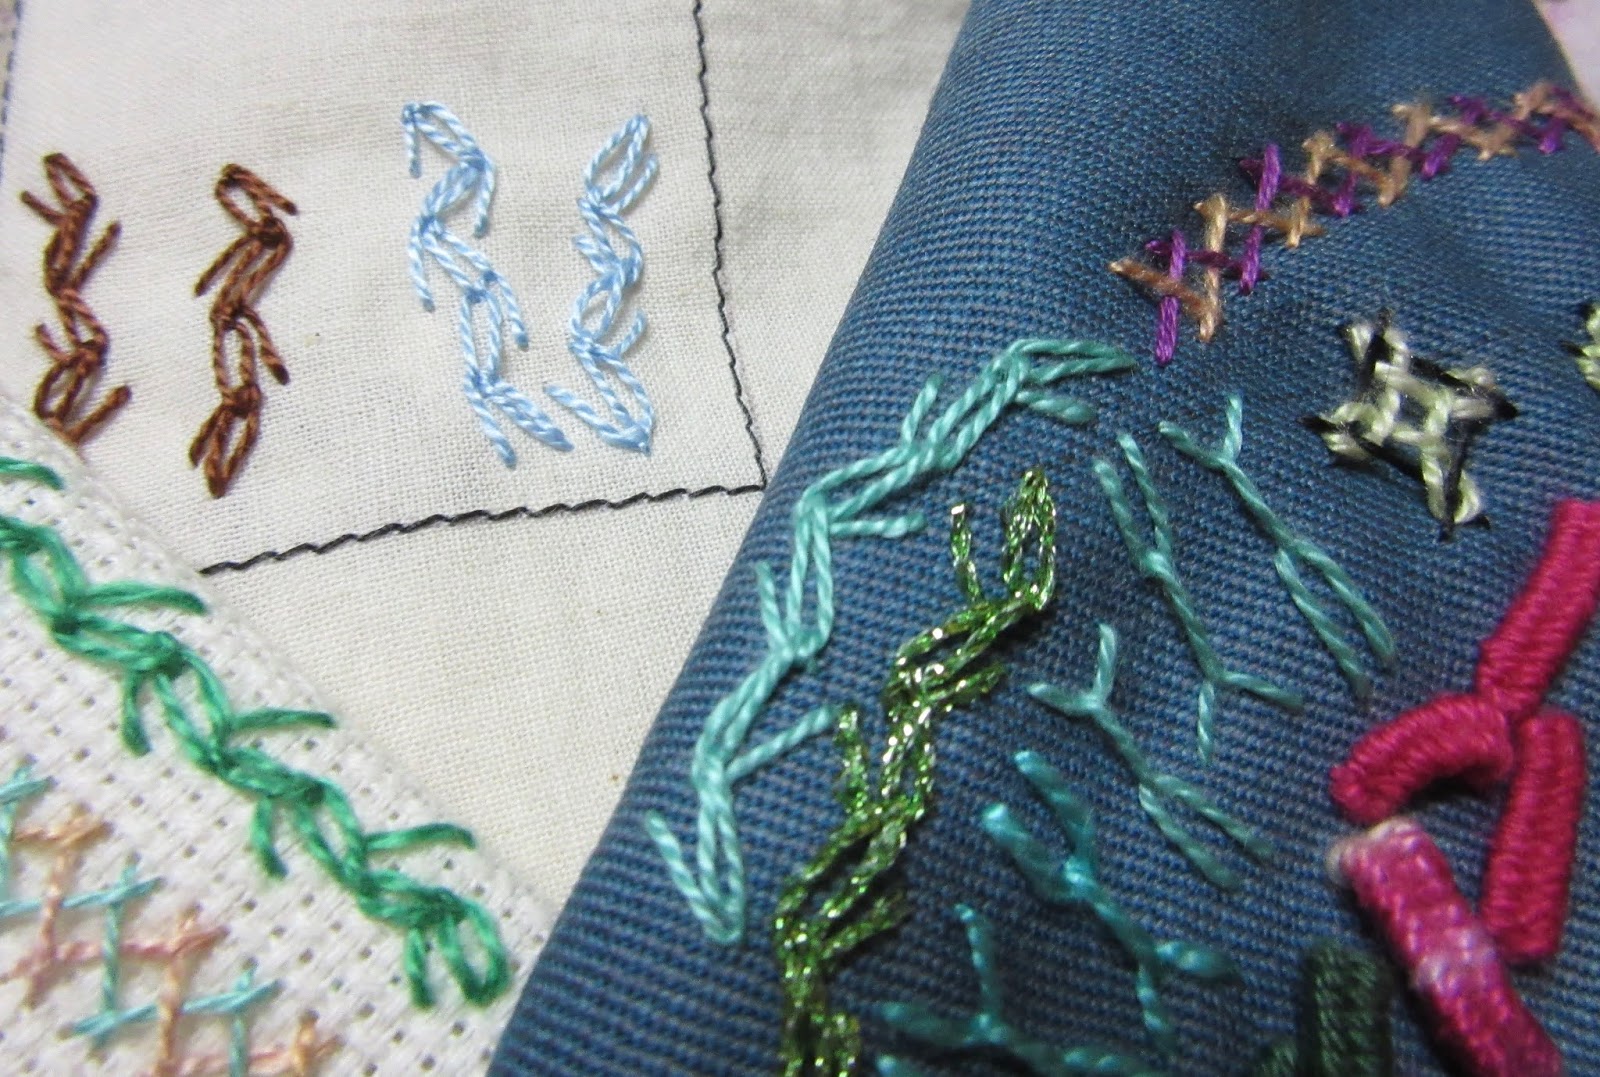 Queenie's Needlework: Sunday Stitch School - Lesson 142: Ieshininninu  Chieshirikochu Stitch